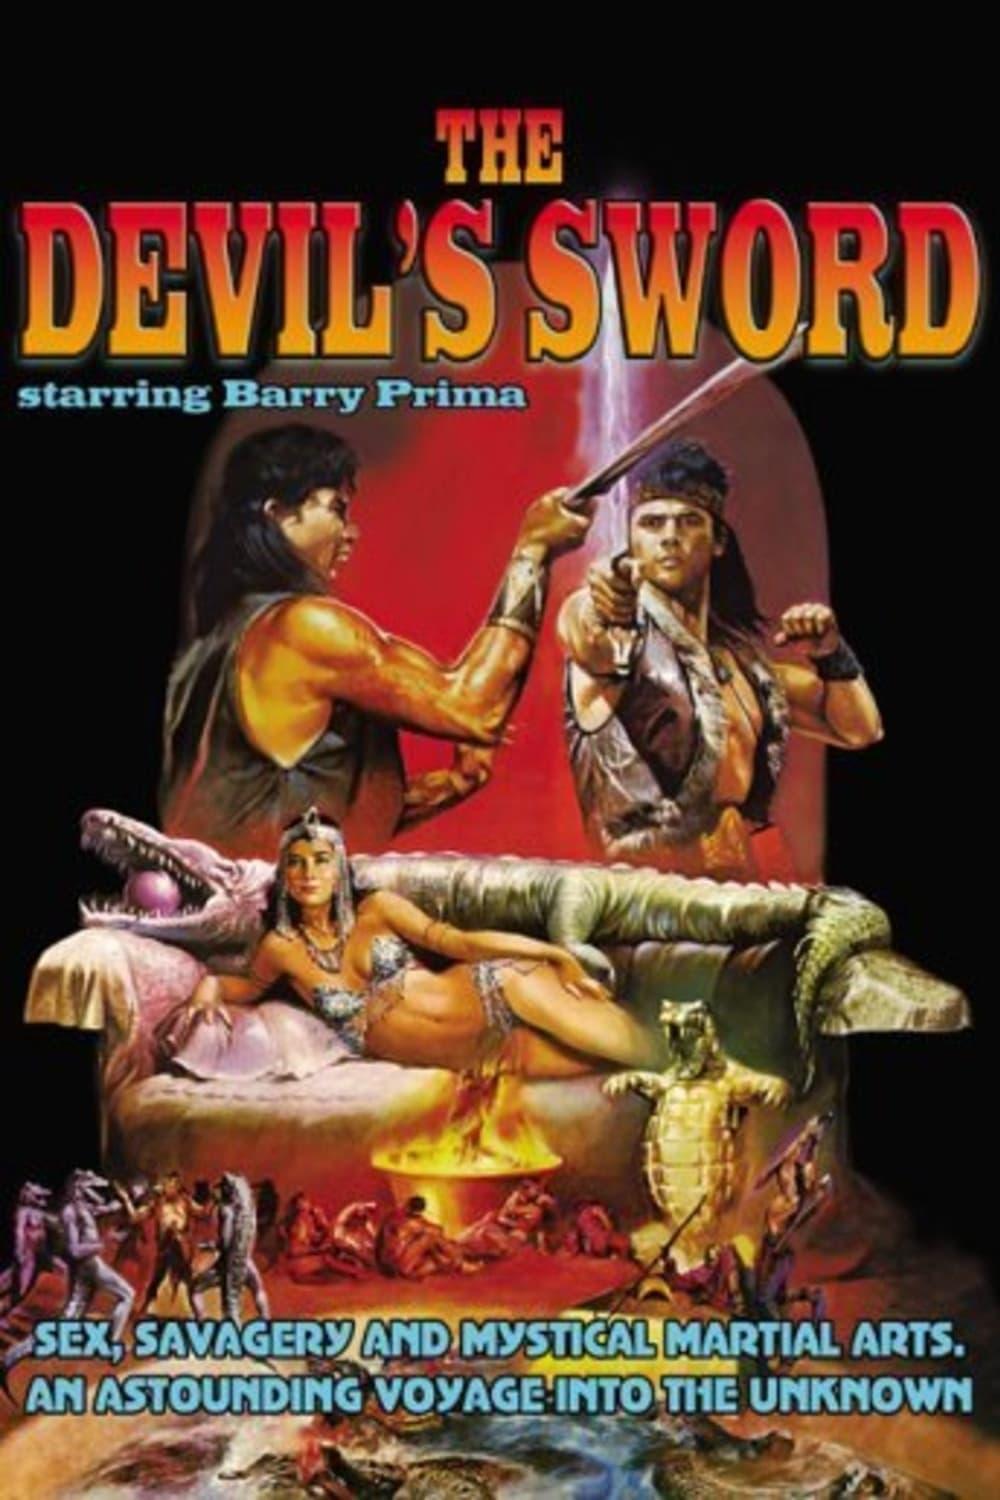 The Devil's Sword poster